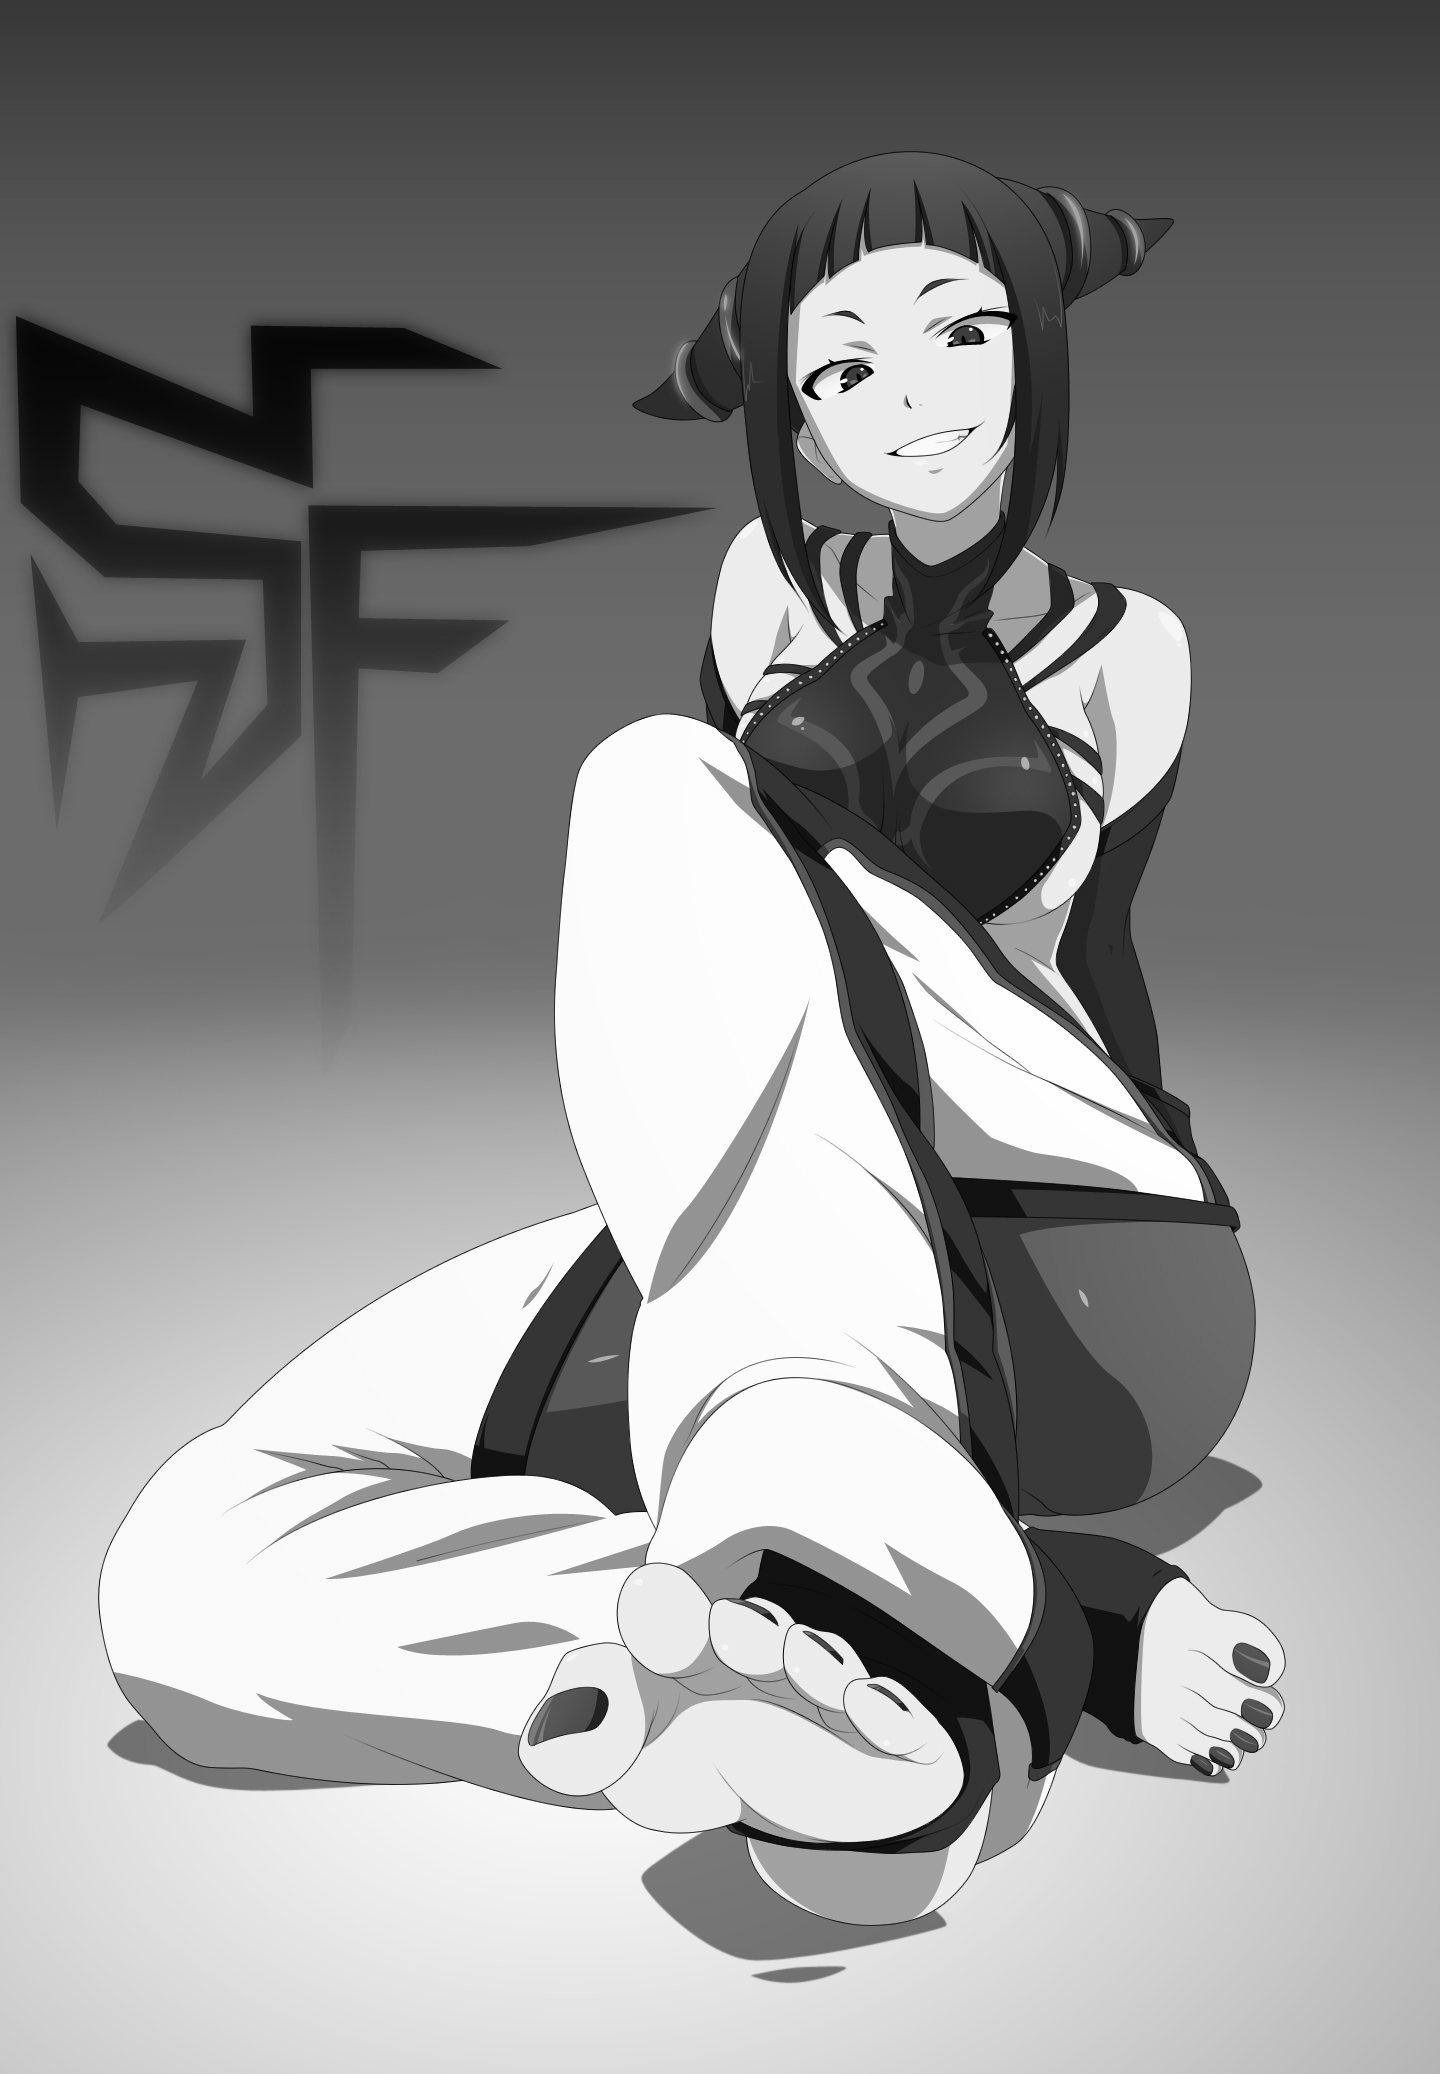 черно белая картинка аниме картинка han_juri из аниме street fighter